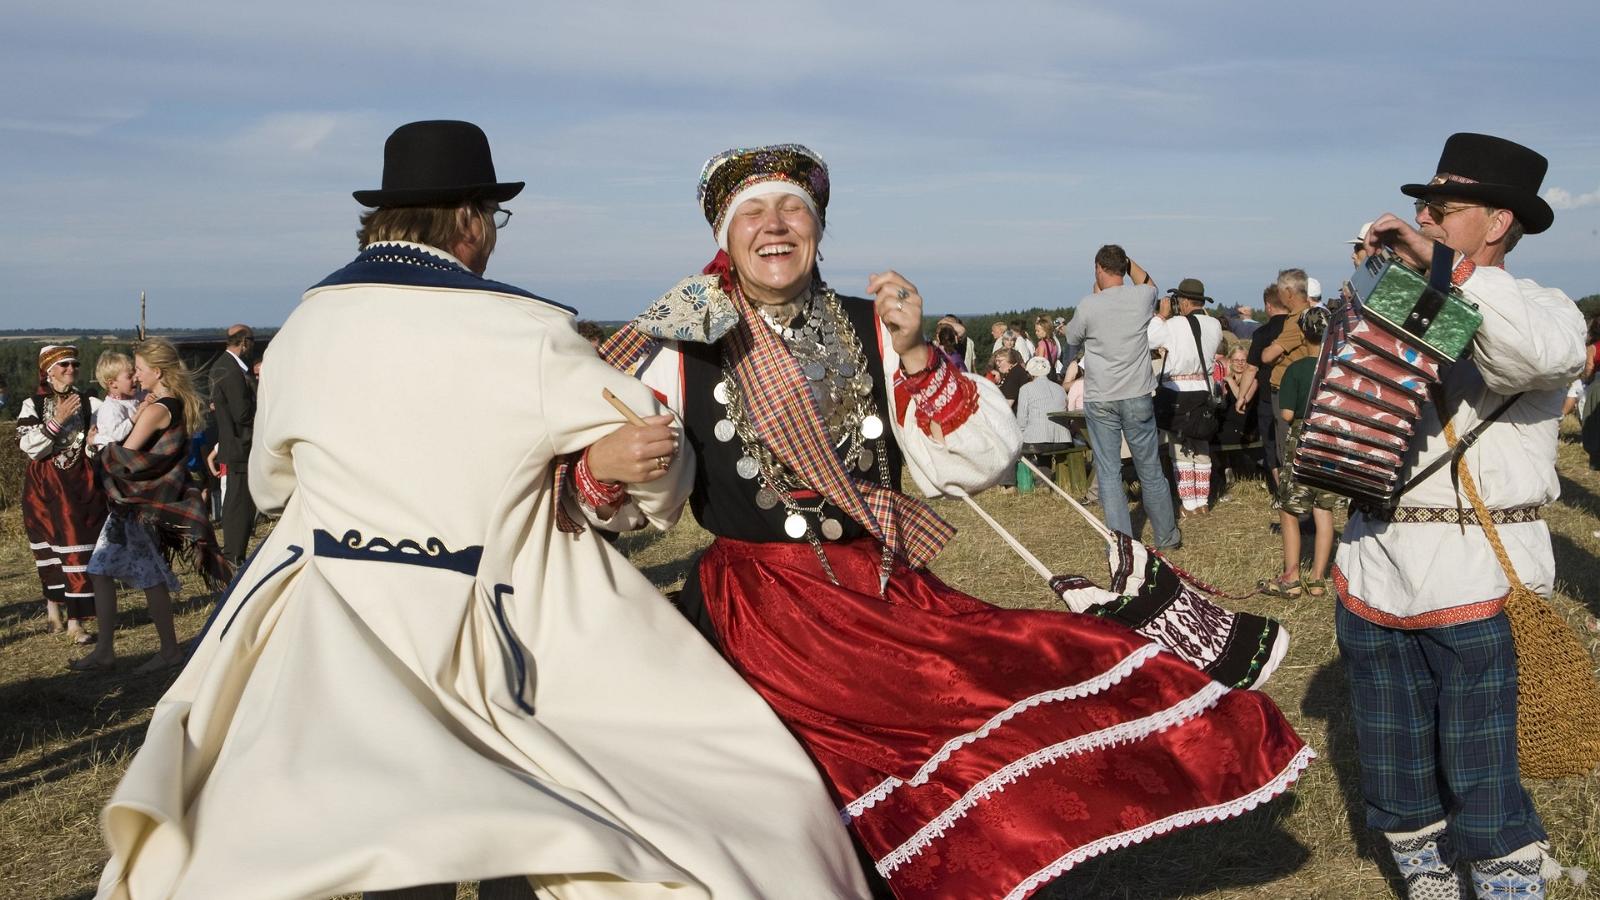 Dressing traditionally - folk costumes in Estonia